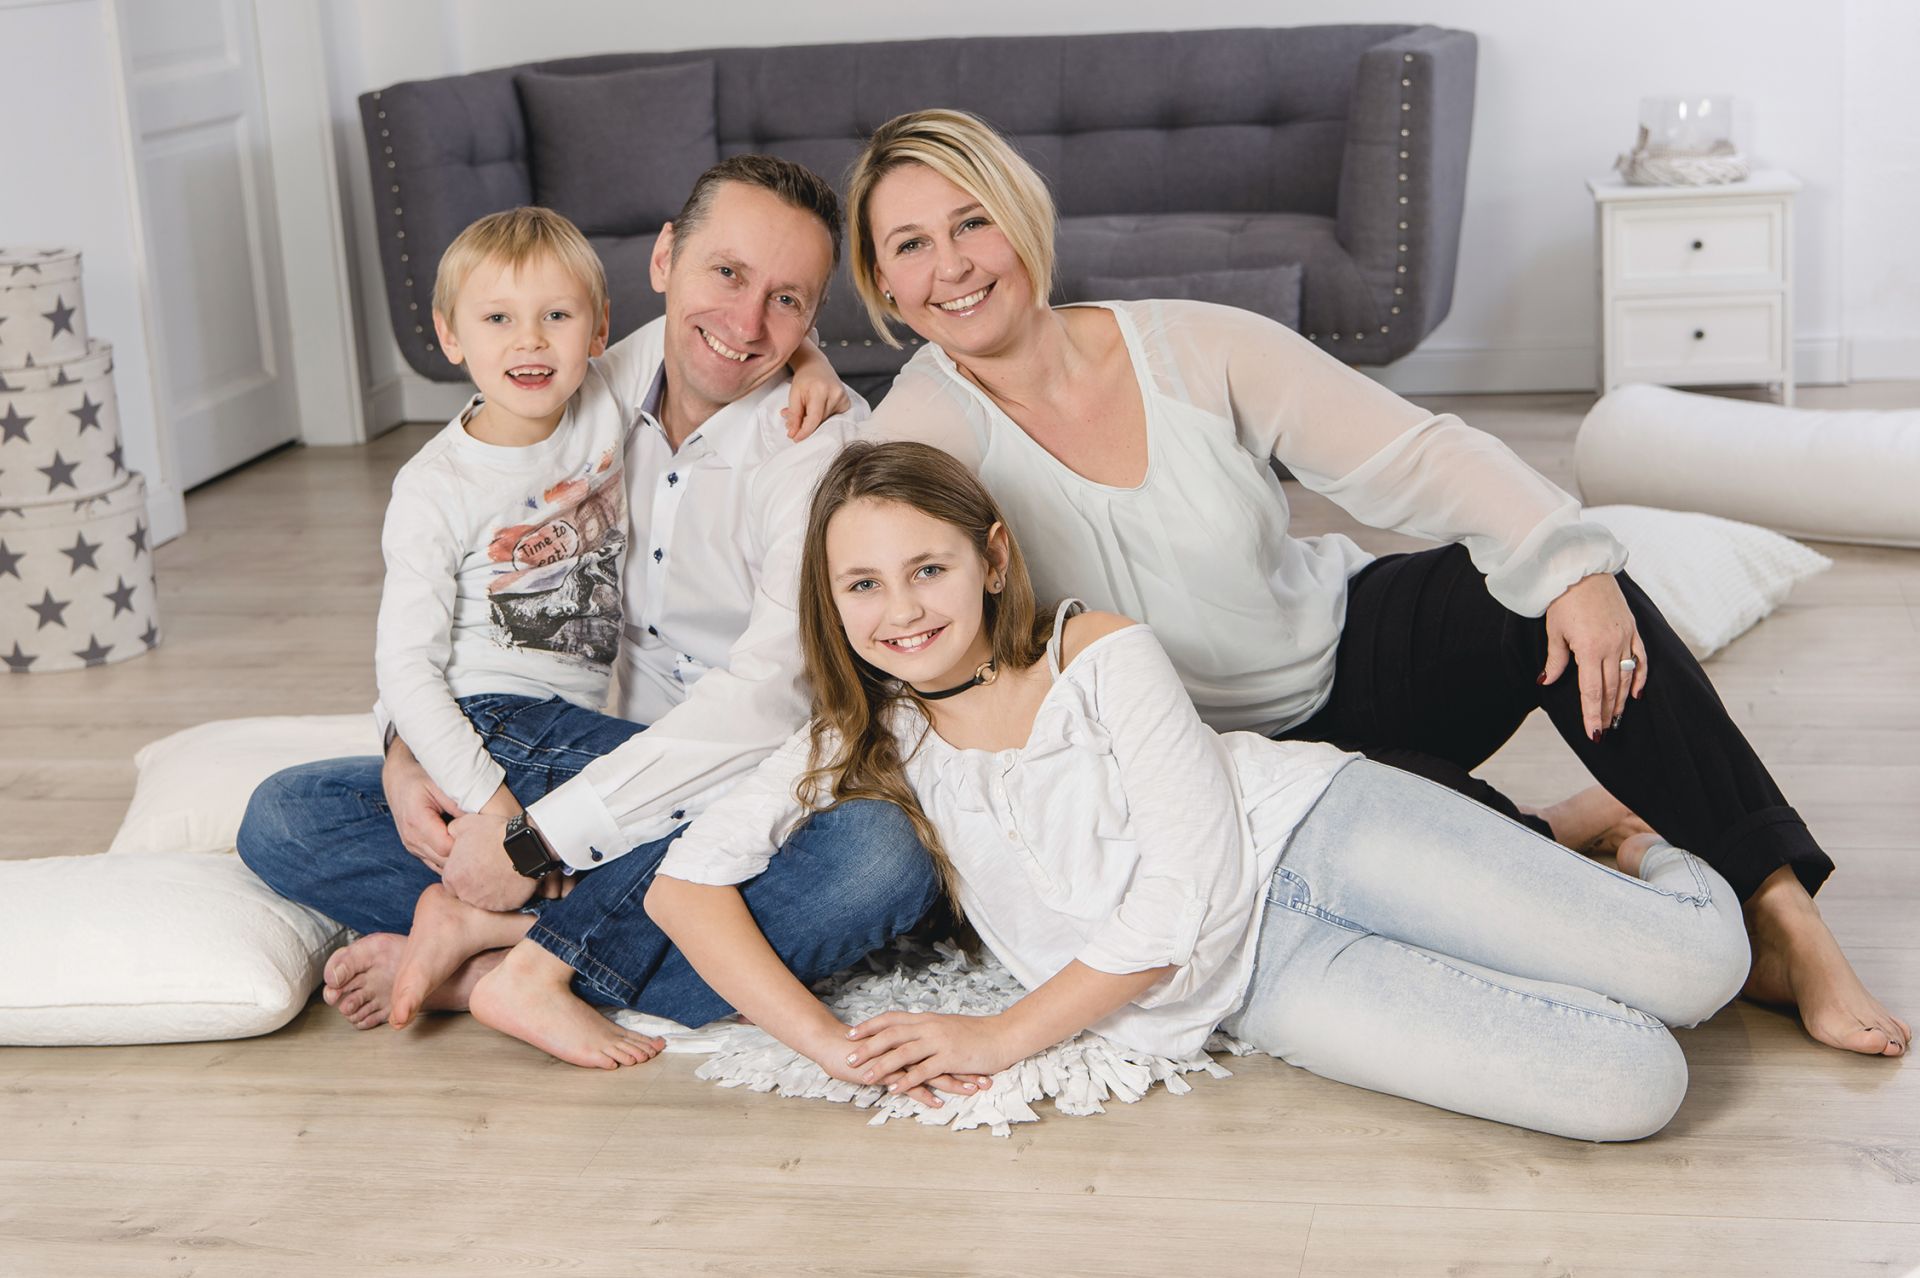 Familienfotos-Familienfotografie-Porträtfotografie-Fotografie-Katharina-Müller-Limburg-Eschhofen-www.fotografie-km.de-Indoor-und-Outdoor-Kinderfotografie